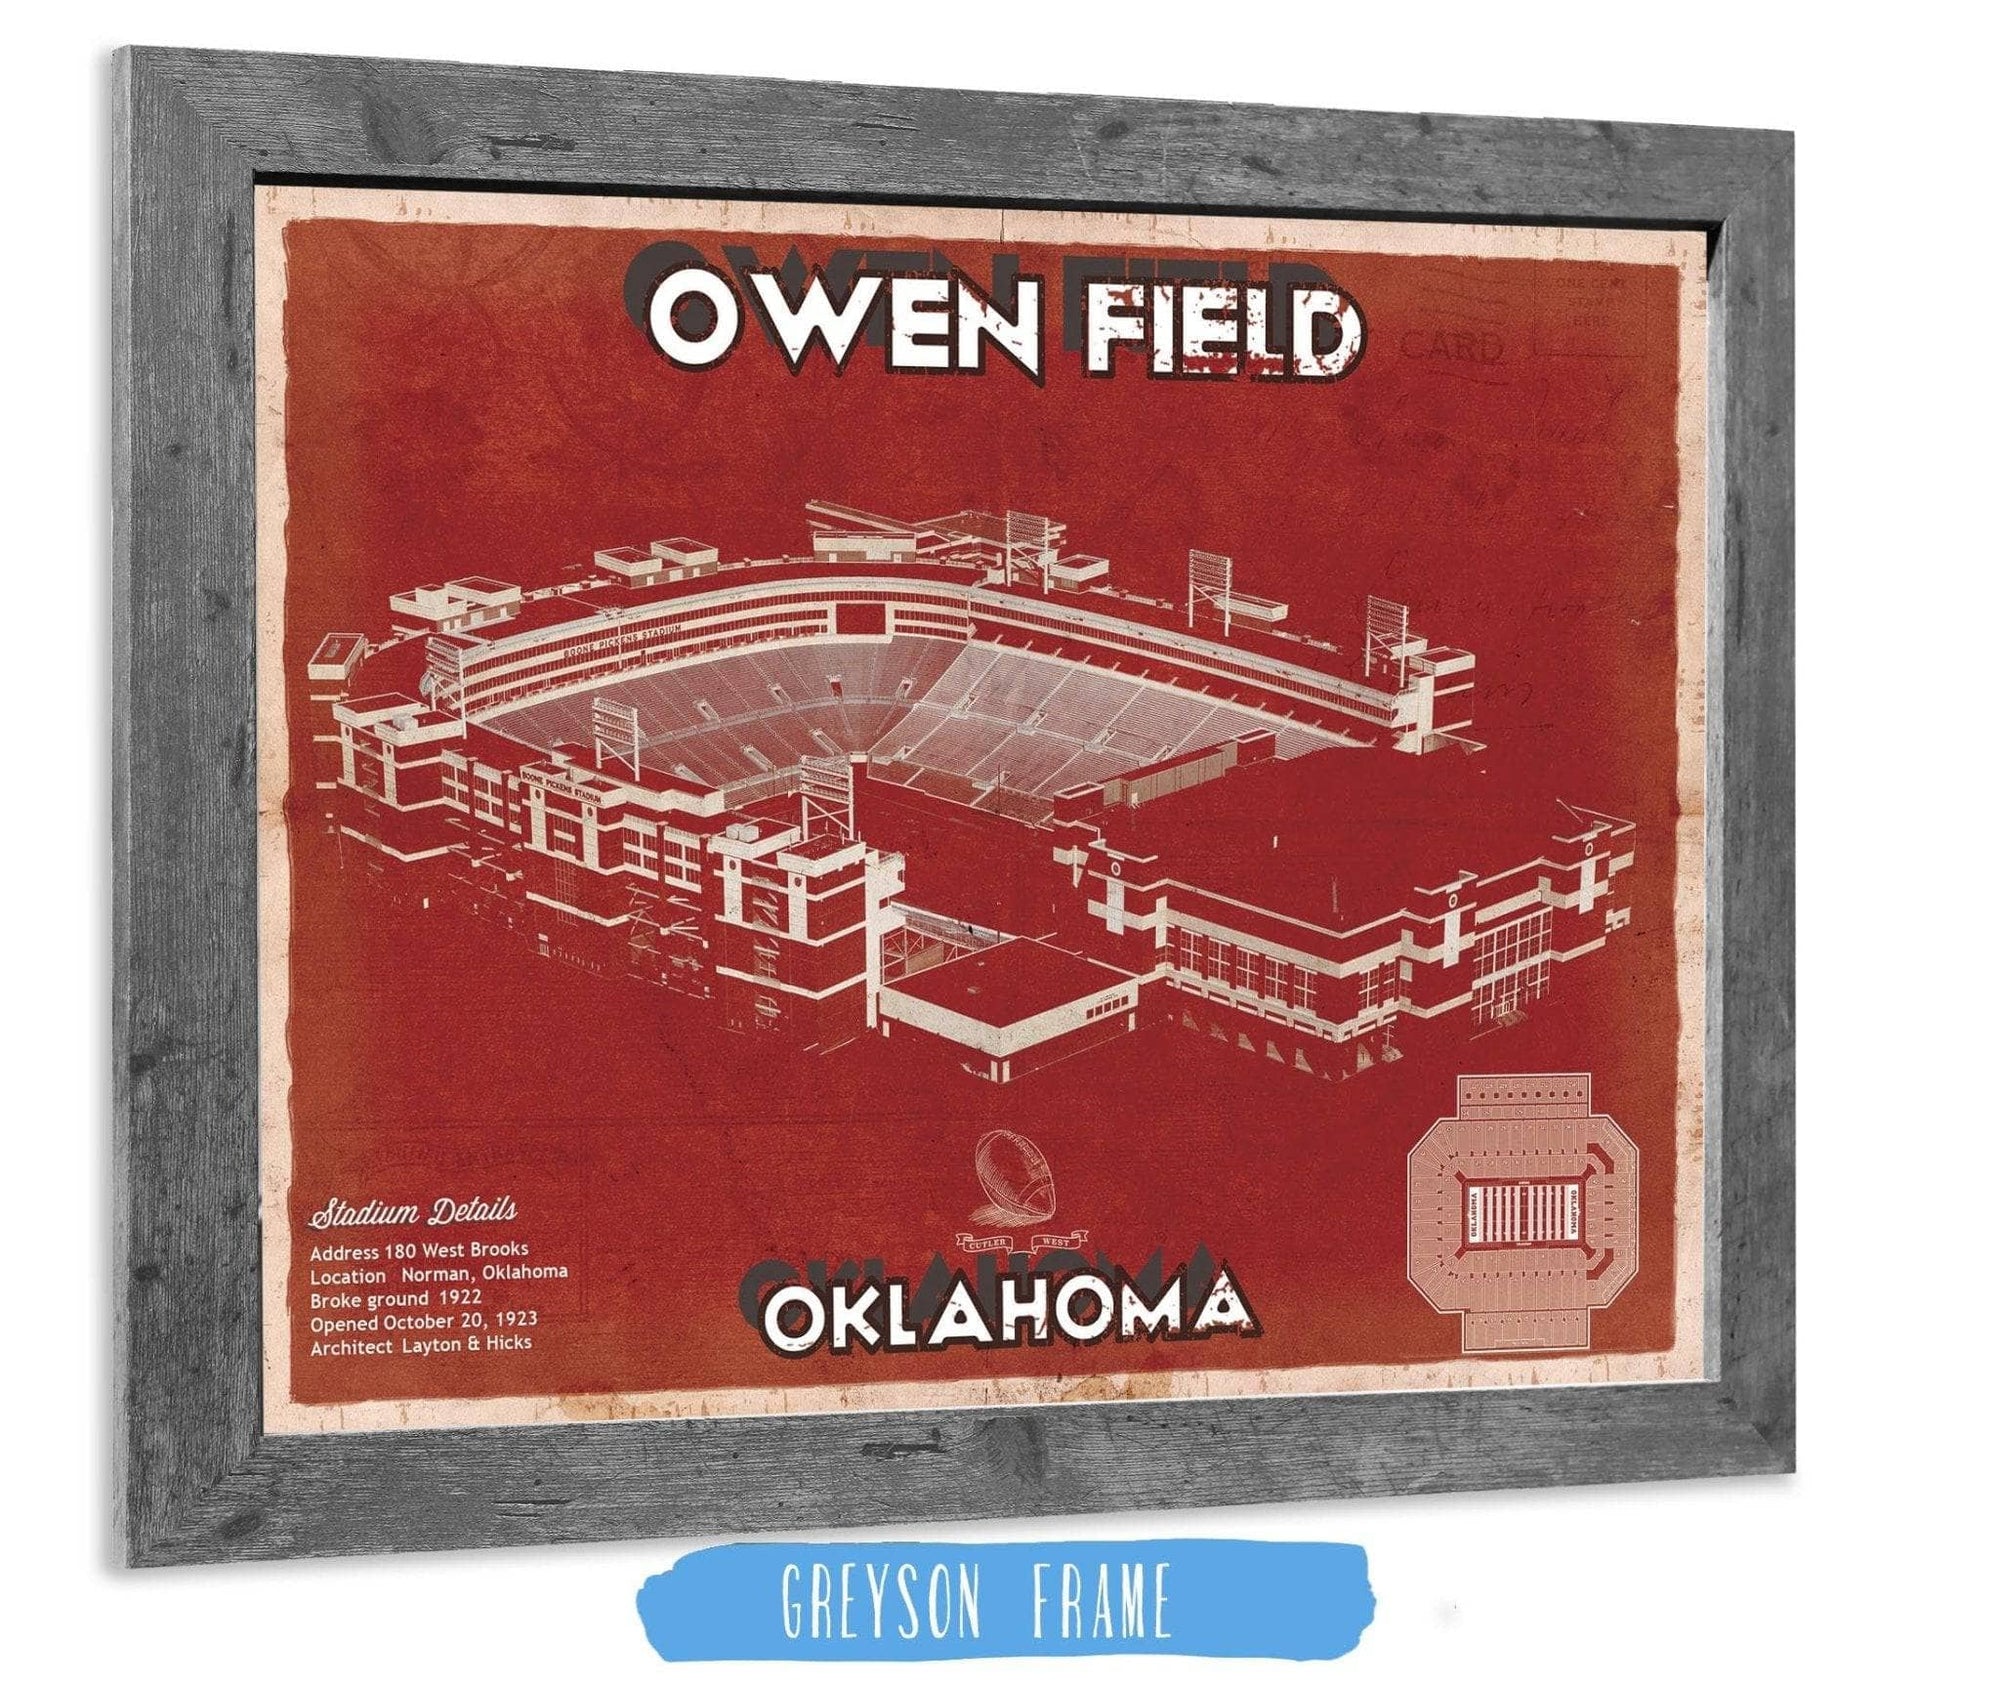 Cutler West College Football Collection 14" x 11" / Greyson Frame Oklahoma Sooners Football - Gaylord Family Oklahoma Memorial Vintage Stadium Blueprint Art Print 933350153_70038